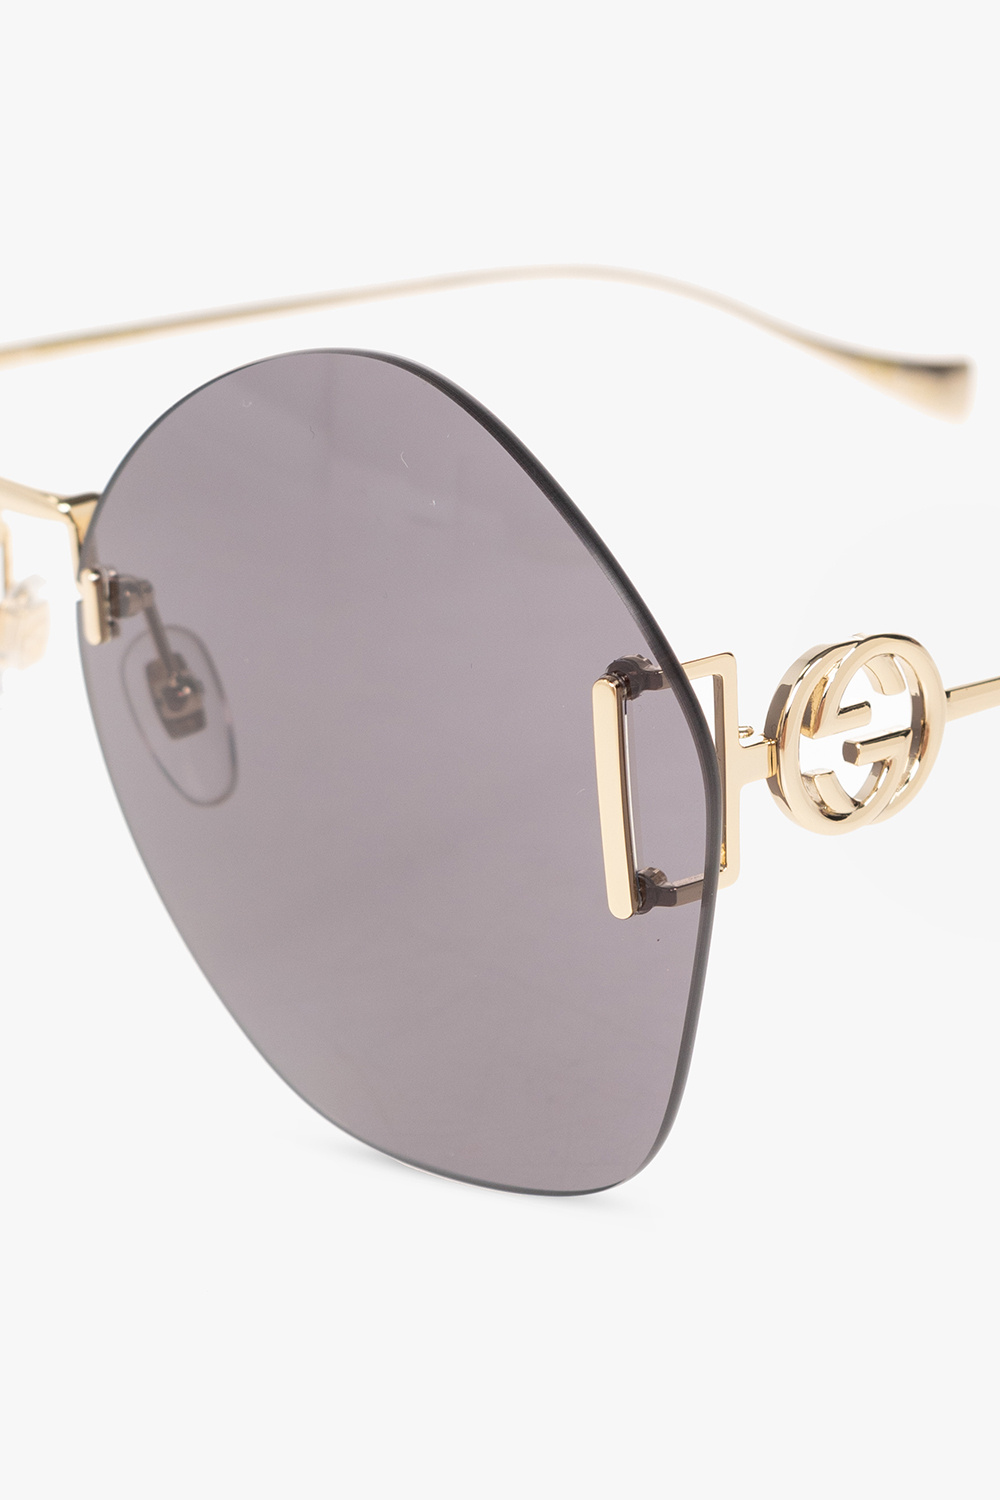 Gucci transparent rectangular-frame sunglasses